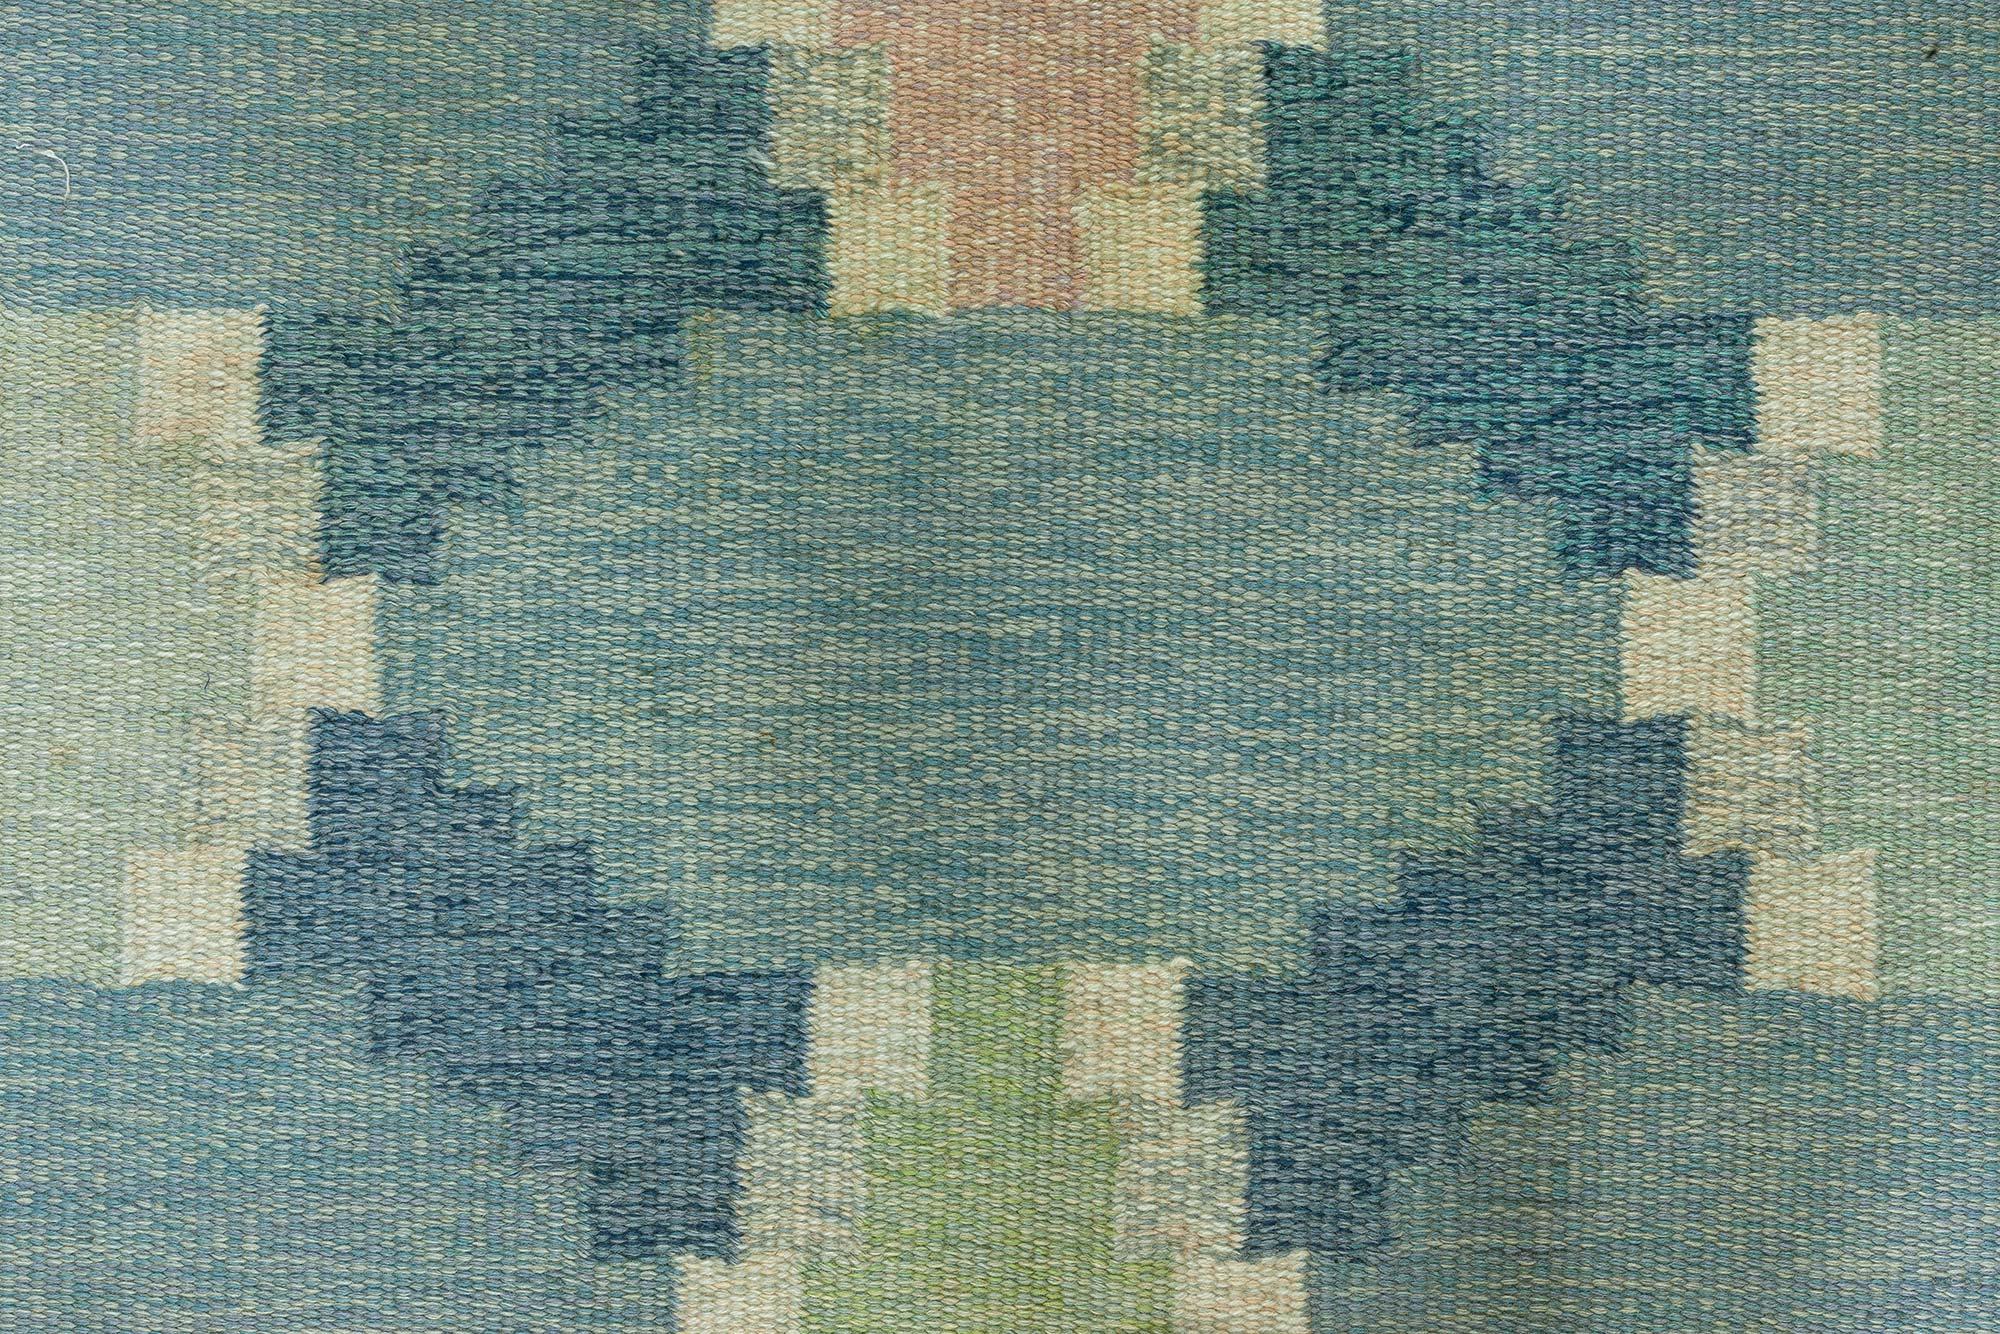 Vintage Swedish blue flat woven rug by Ingegerd Silow
Size: 5'6